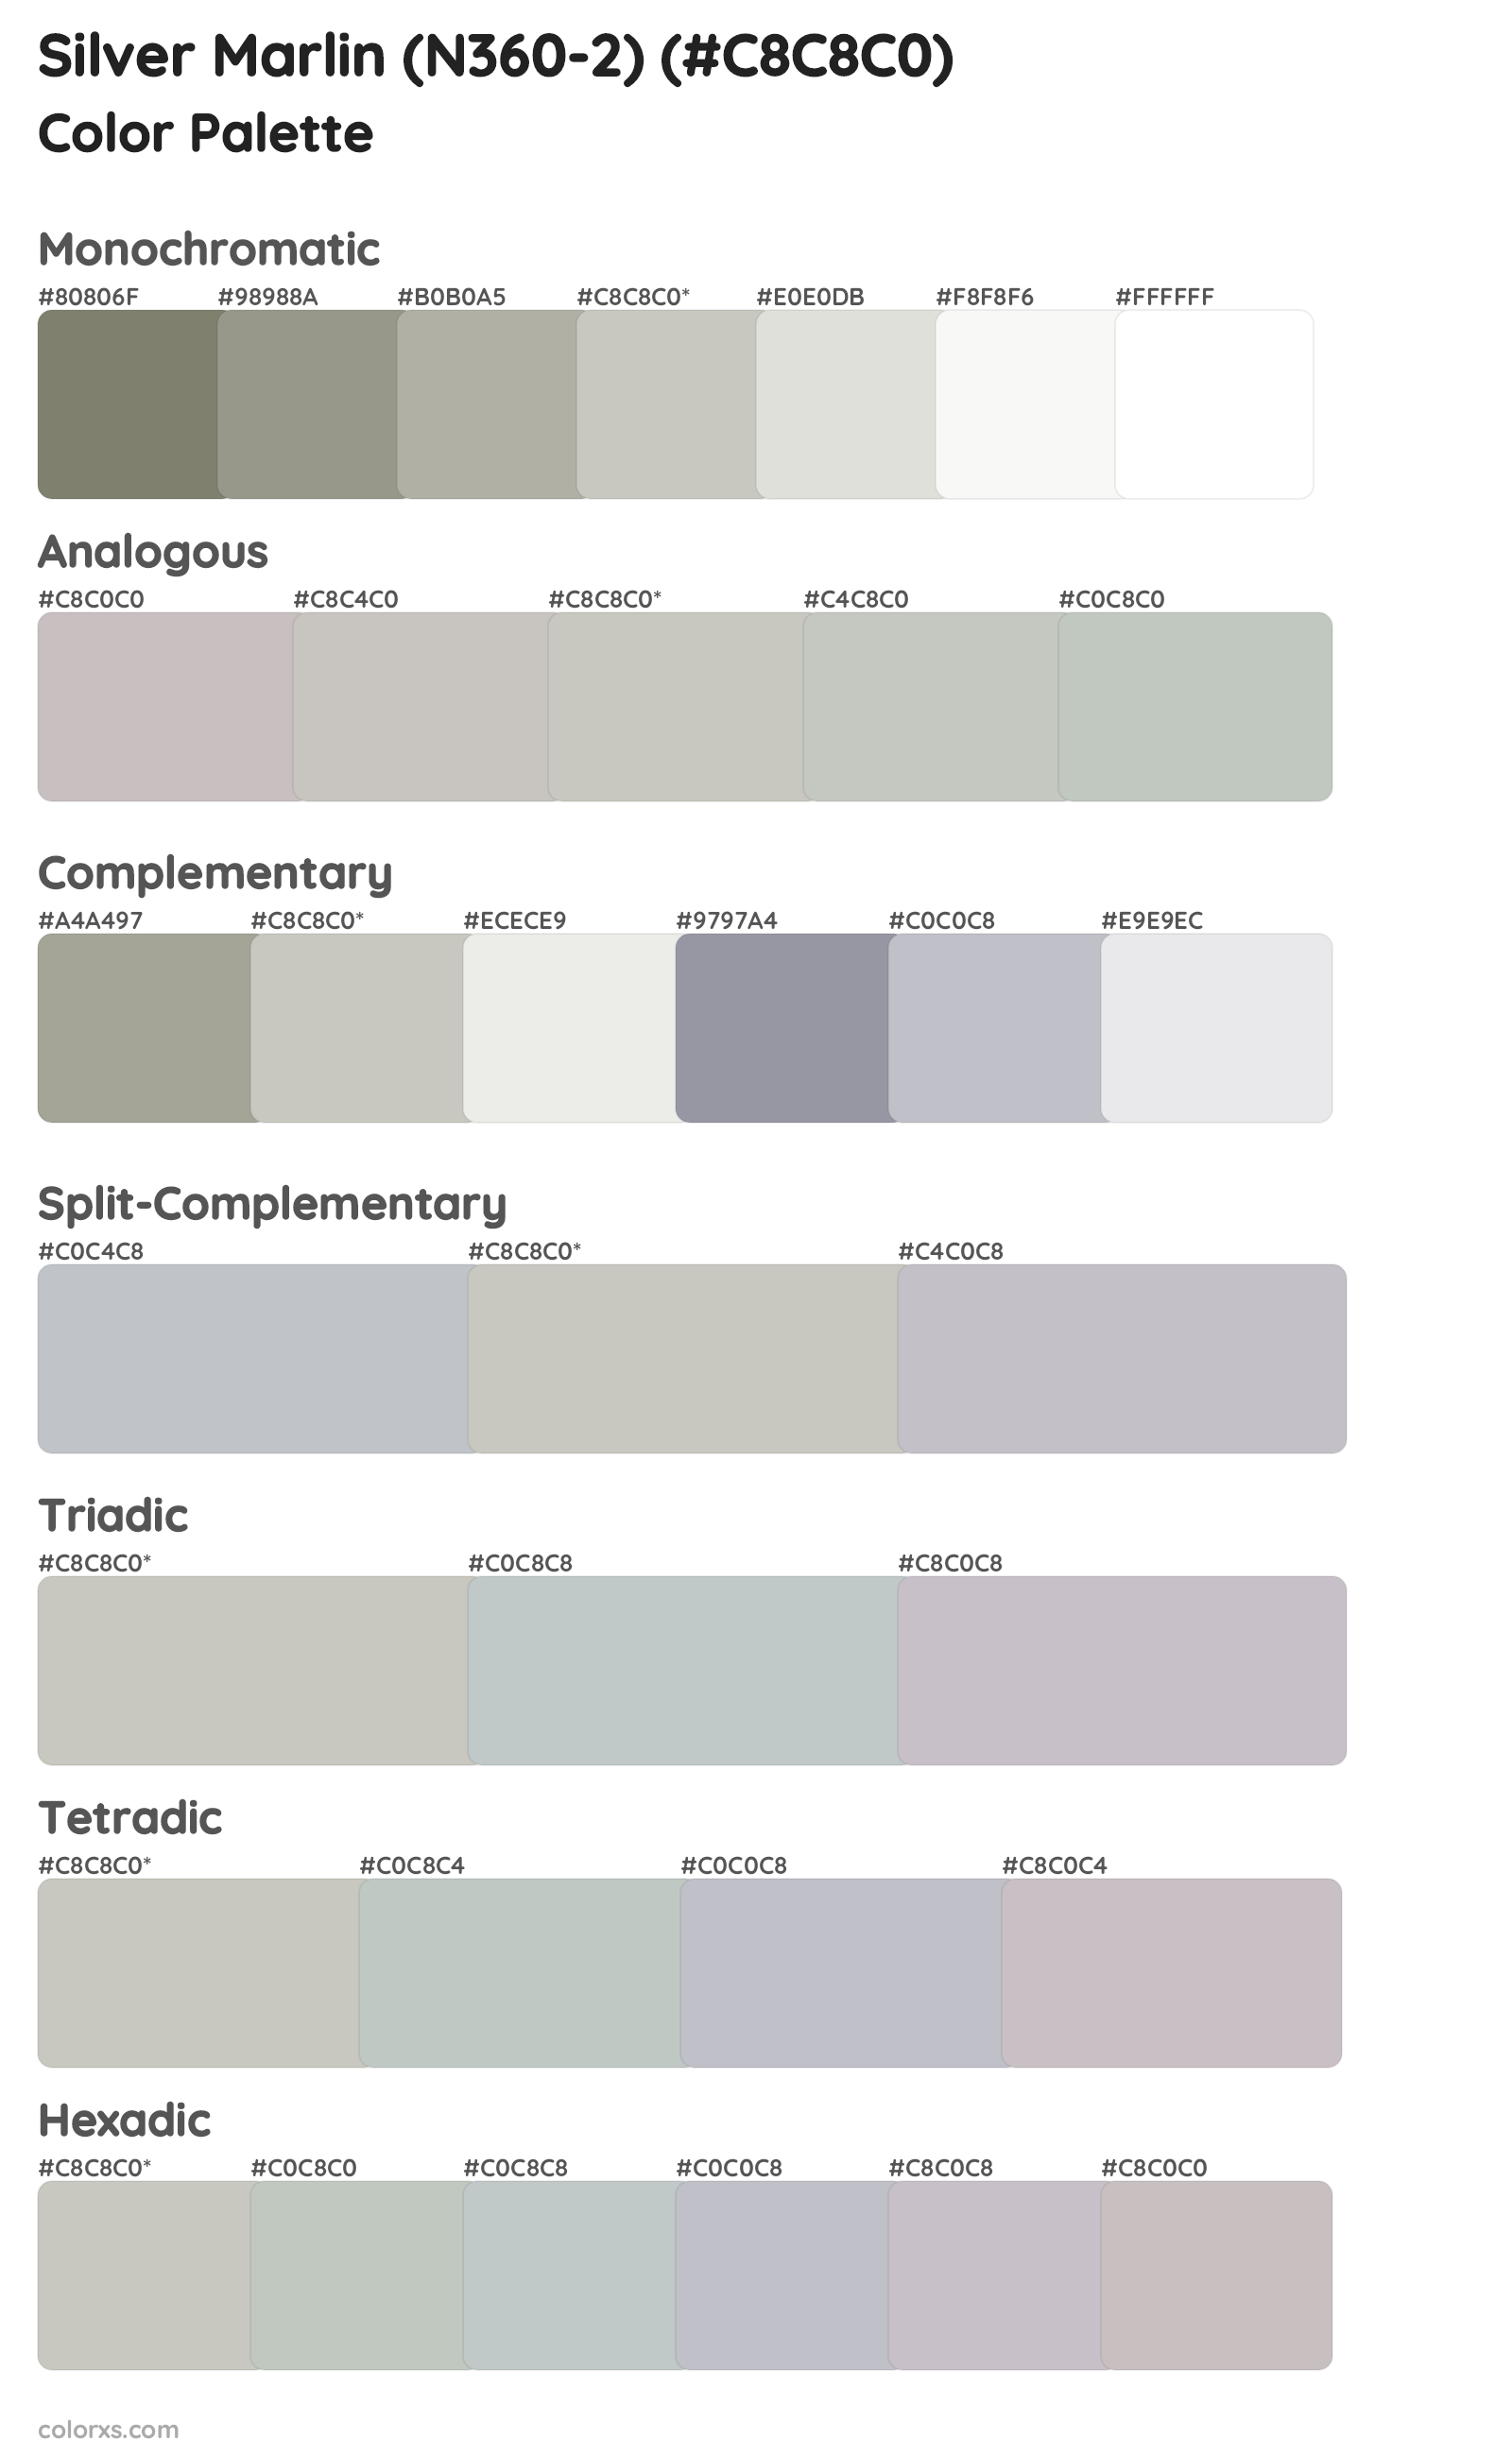 Silver Marlin (N360-2) Color Scheme Palettes